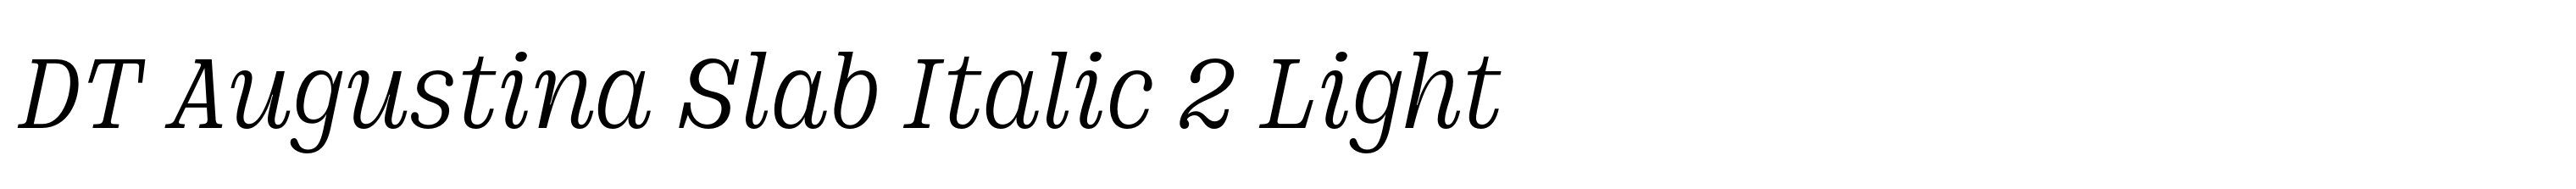 DT Augustina Slab Italic 2 Light